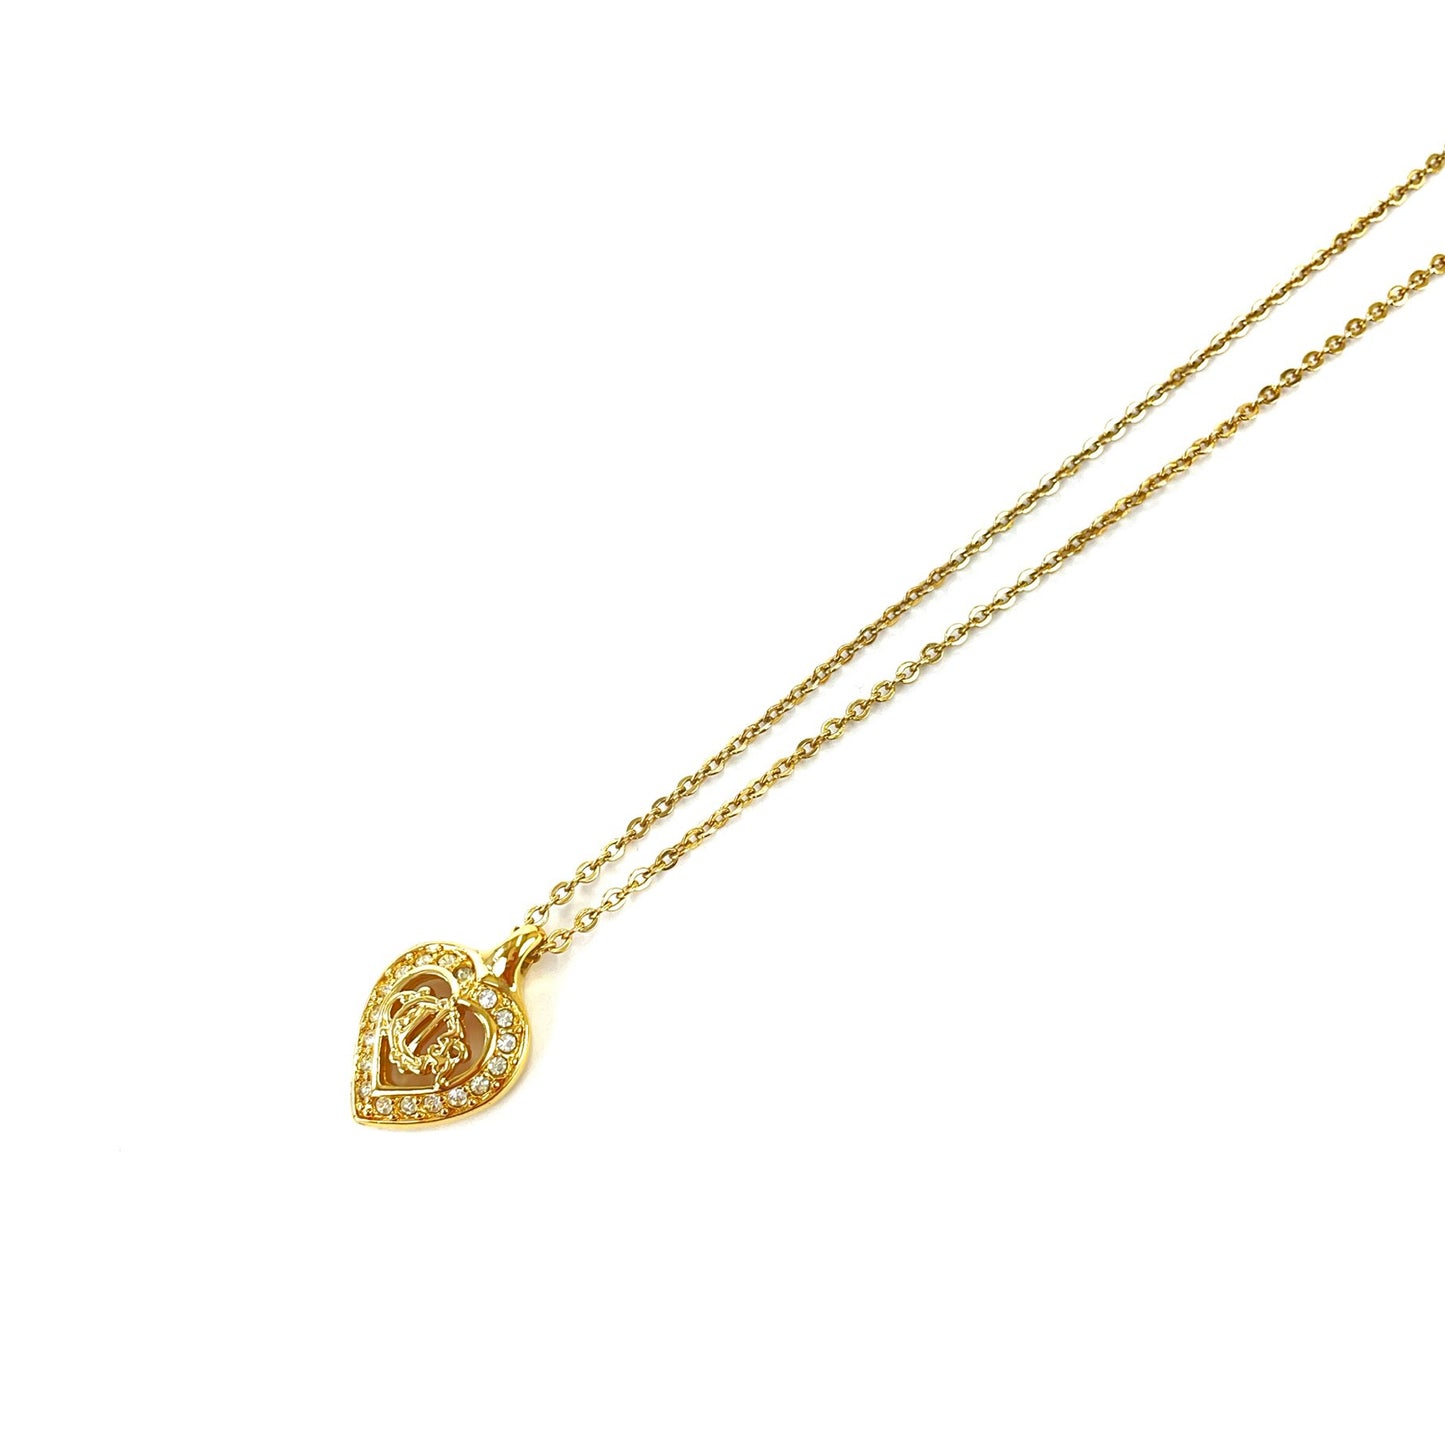 Christian Dior Emblem Stone Heart Necklace Gold Vintage Old 5mr7zs